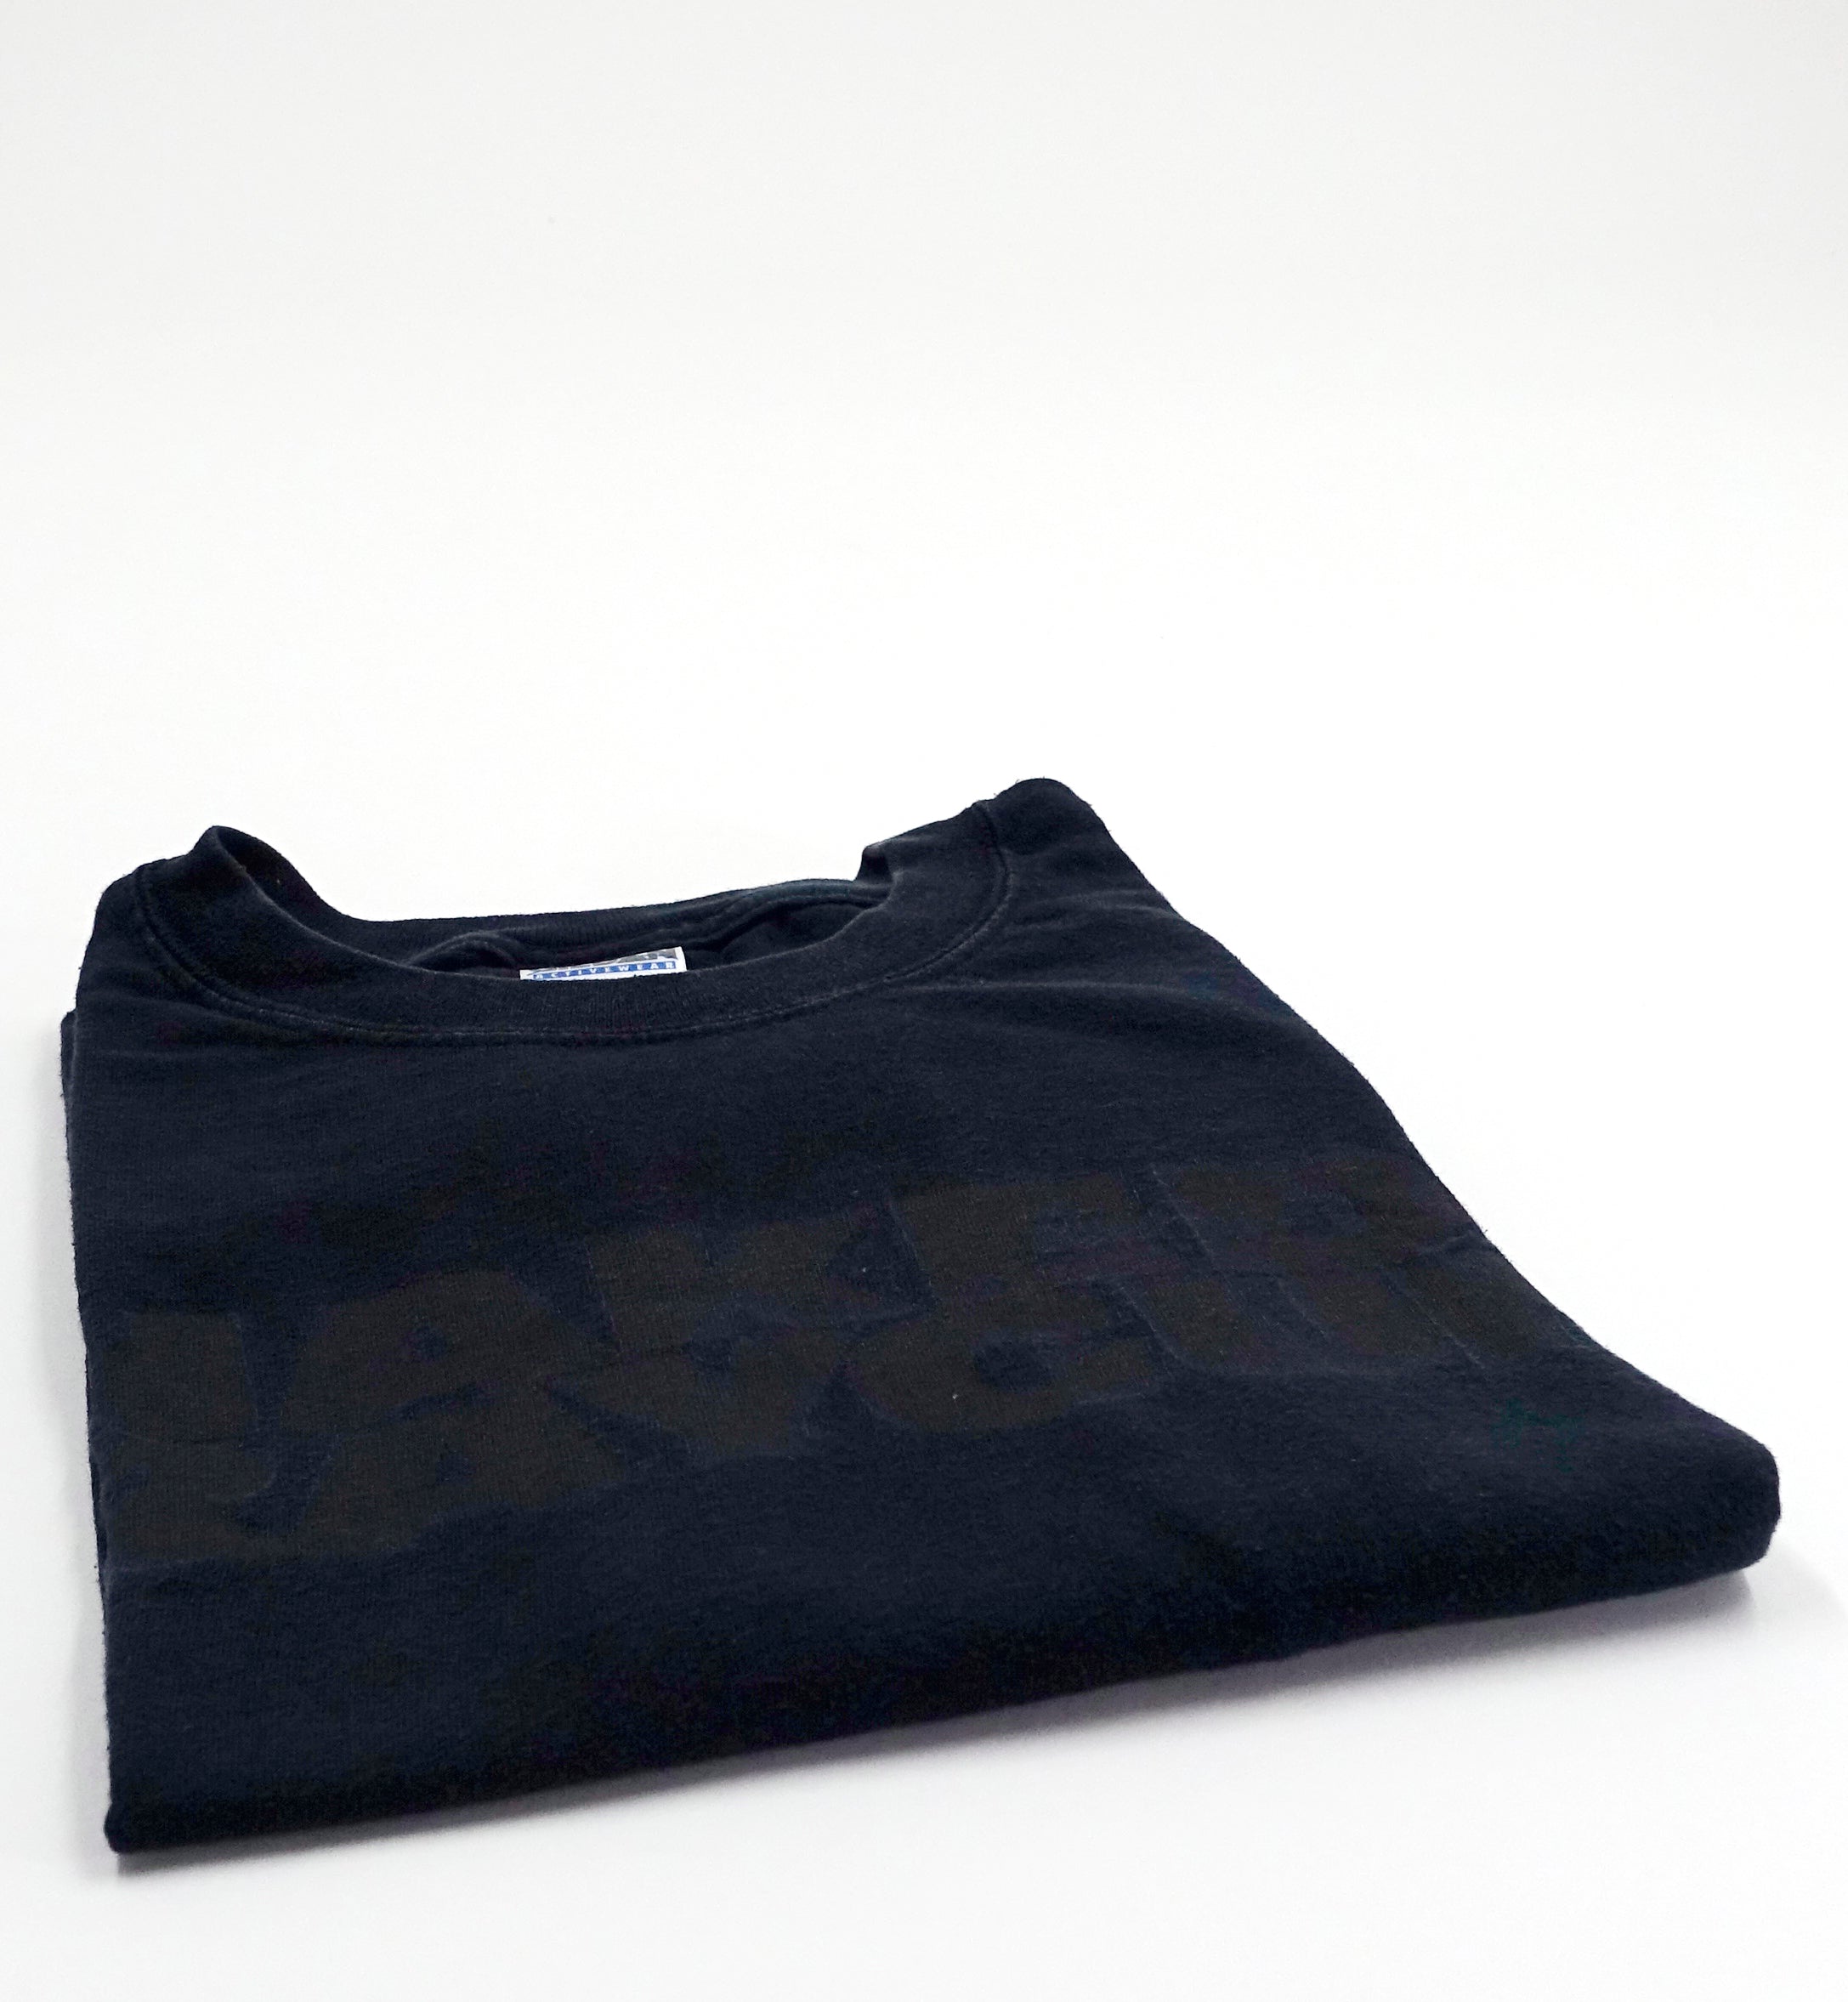 Naked Raygun – Black On Black Logo Late 90's Shirt Size XL